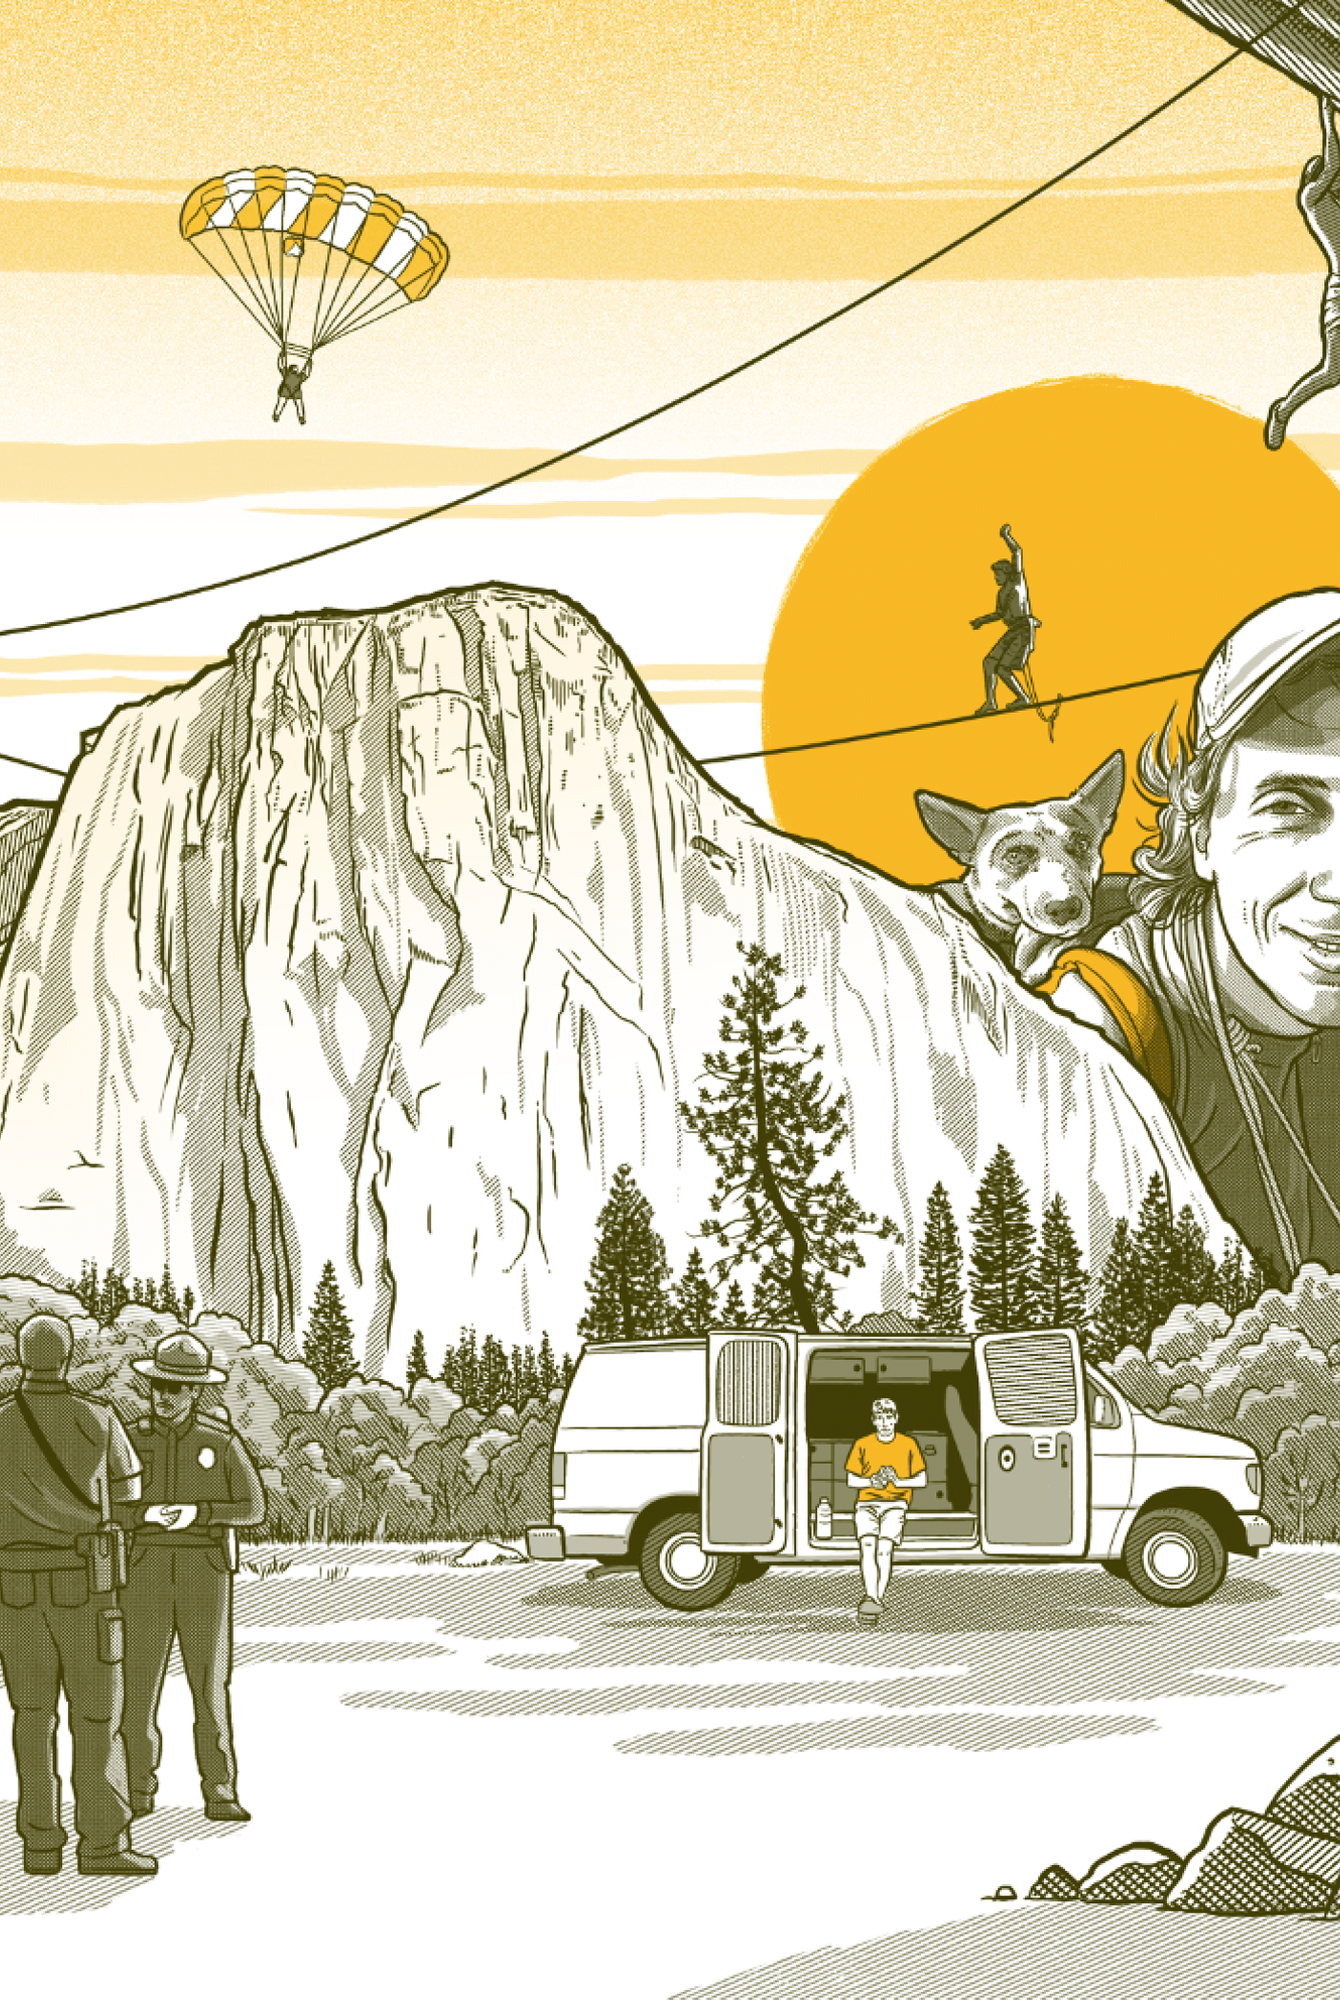 In Profile: The Stone Monkeys of Yosemite